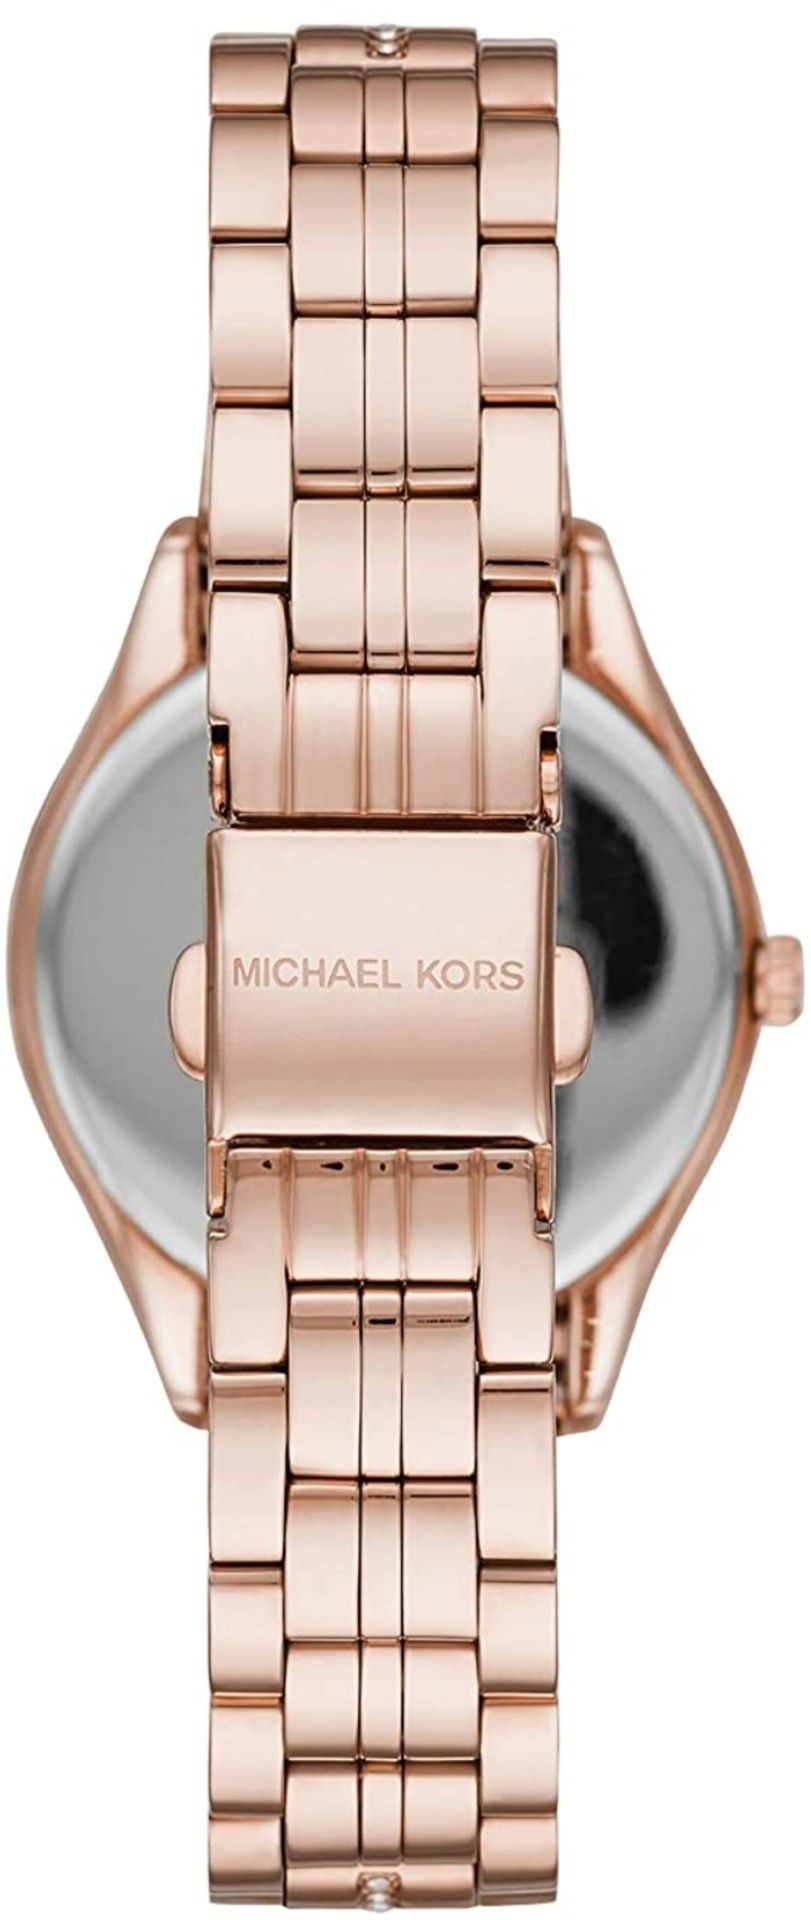 Michael Kors MK3716 Ladies Lauryn Quartz Watch - Image 5 of 6